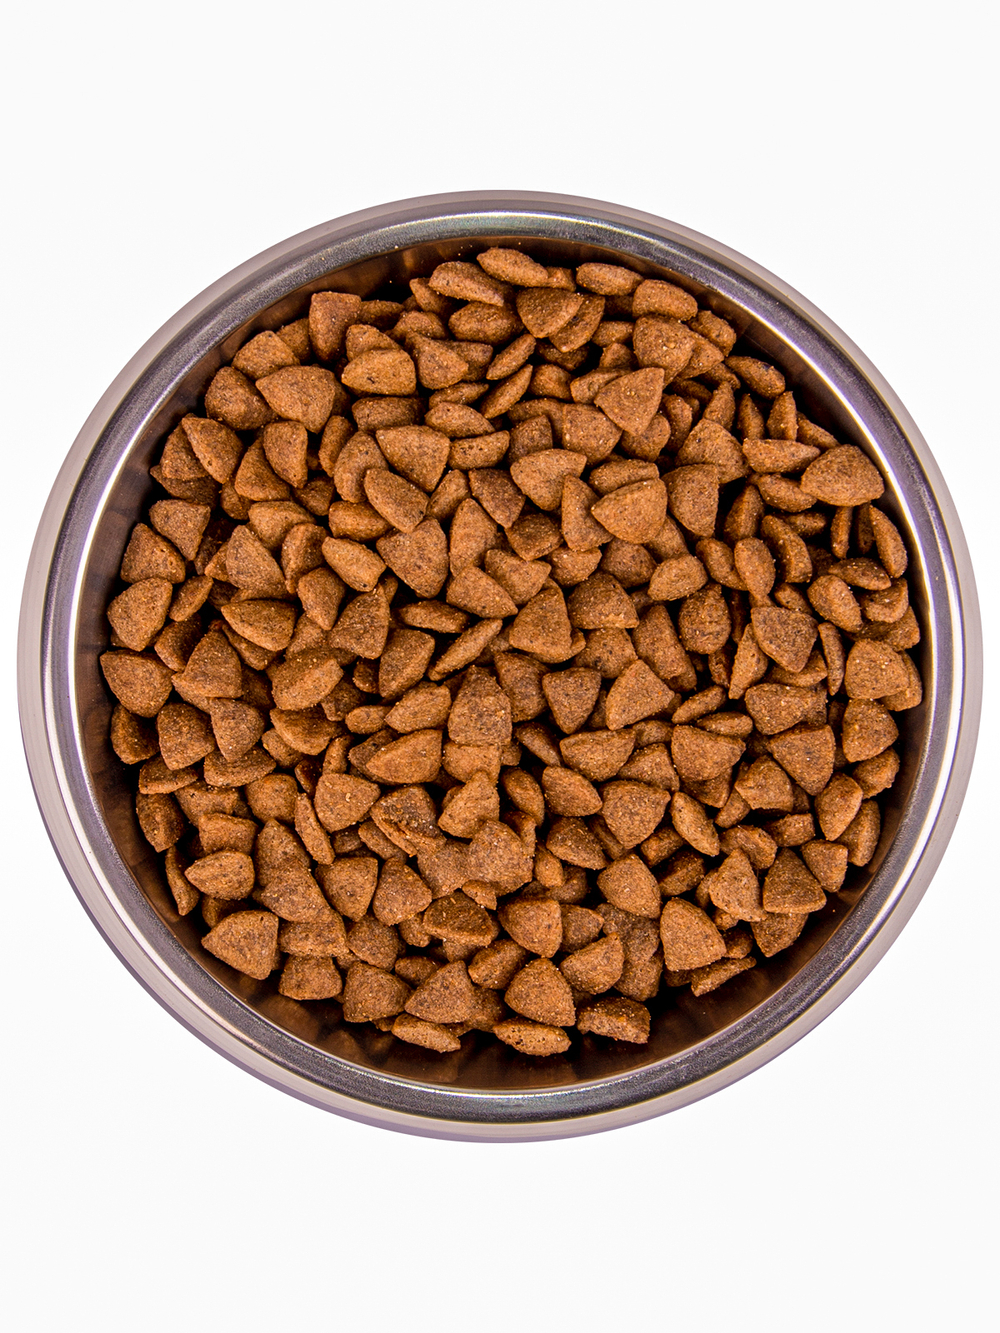 Monge Cat BWild GRAIN FREE беззерновой корм из трески для взрослых кошек 1,5 кг